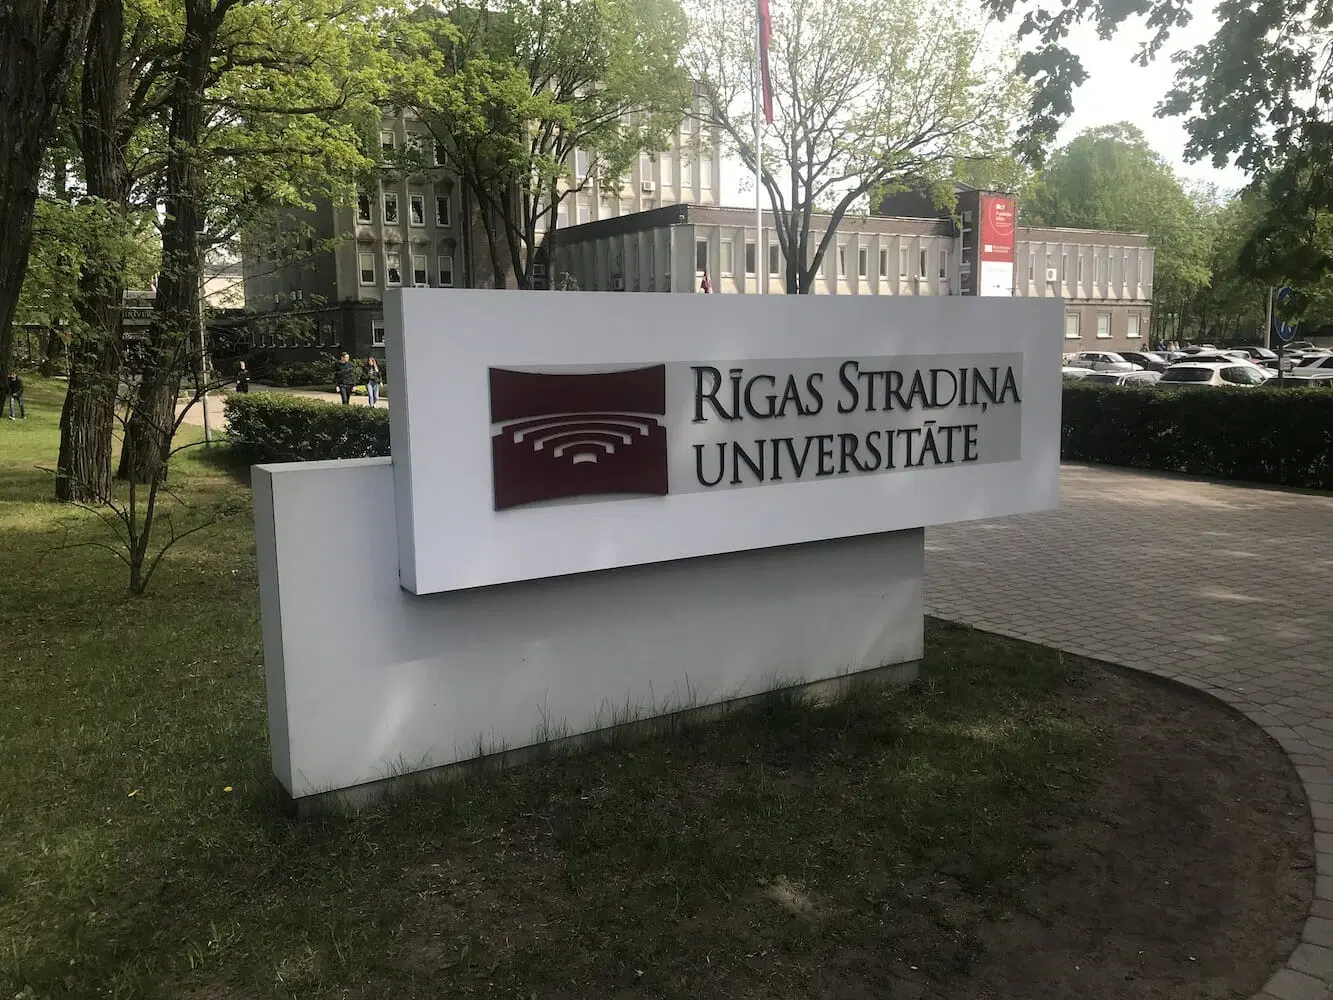 Riga Stradins Üniversitesi International Governance and Diplomacy